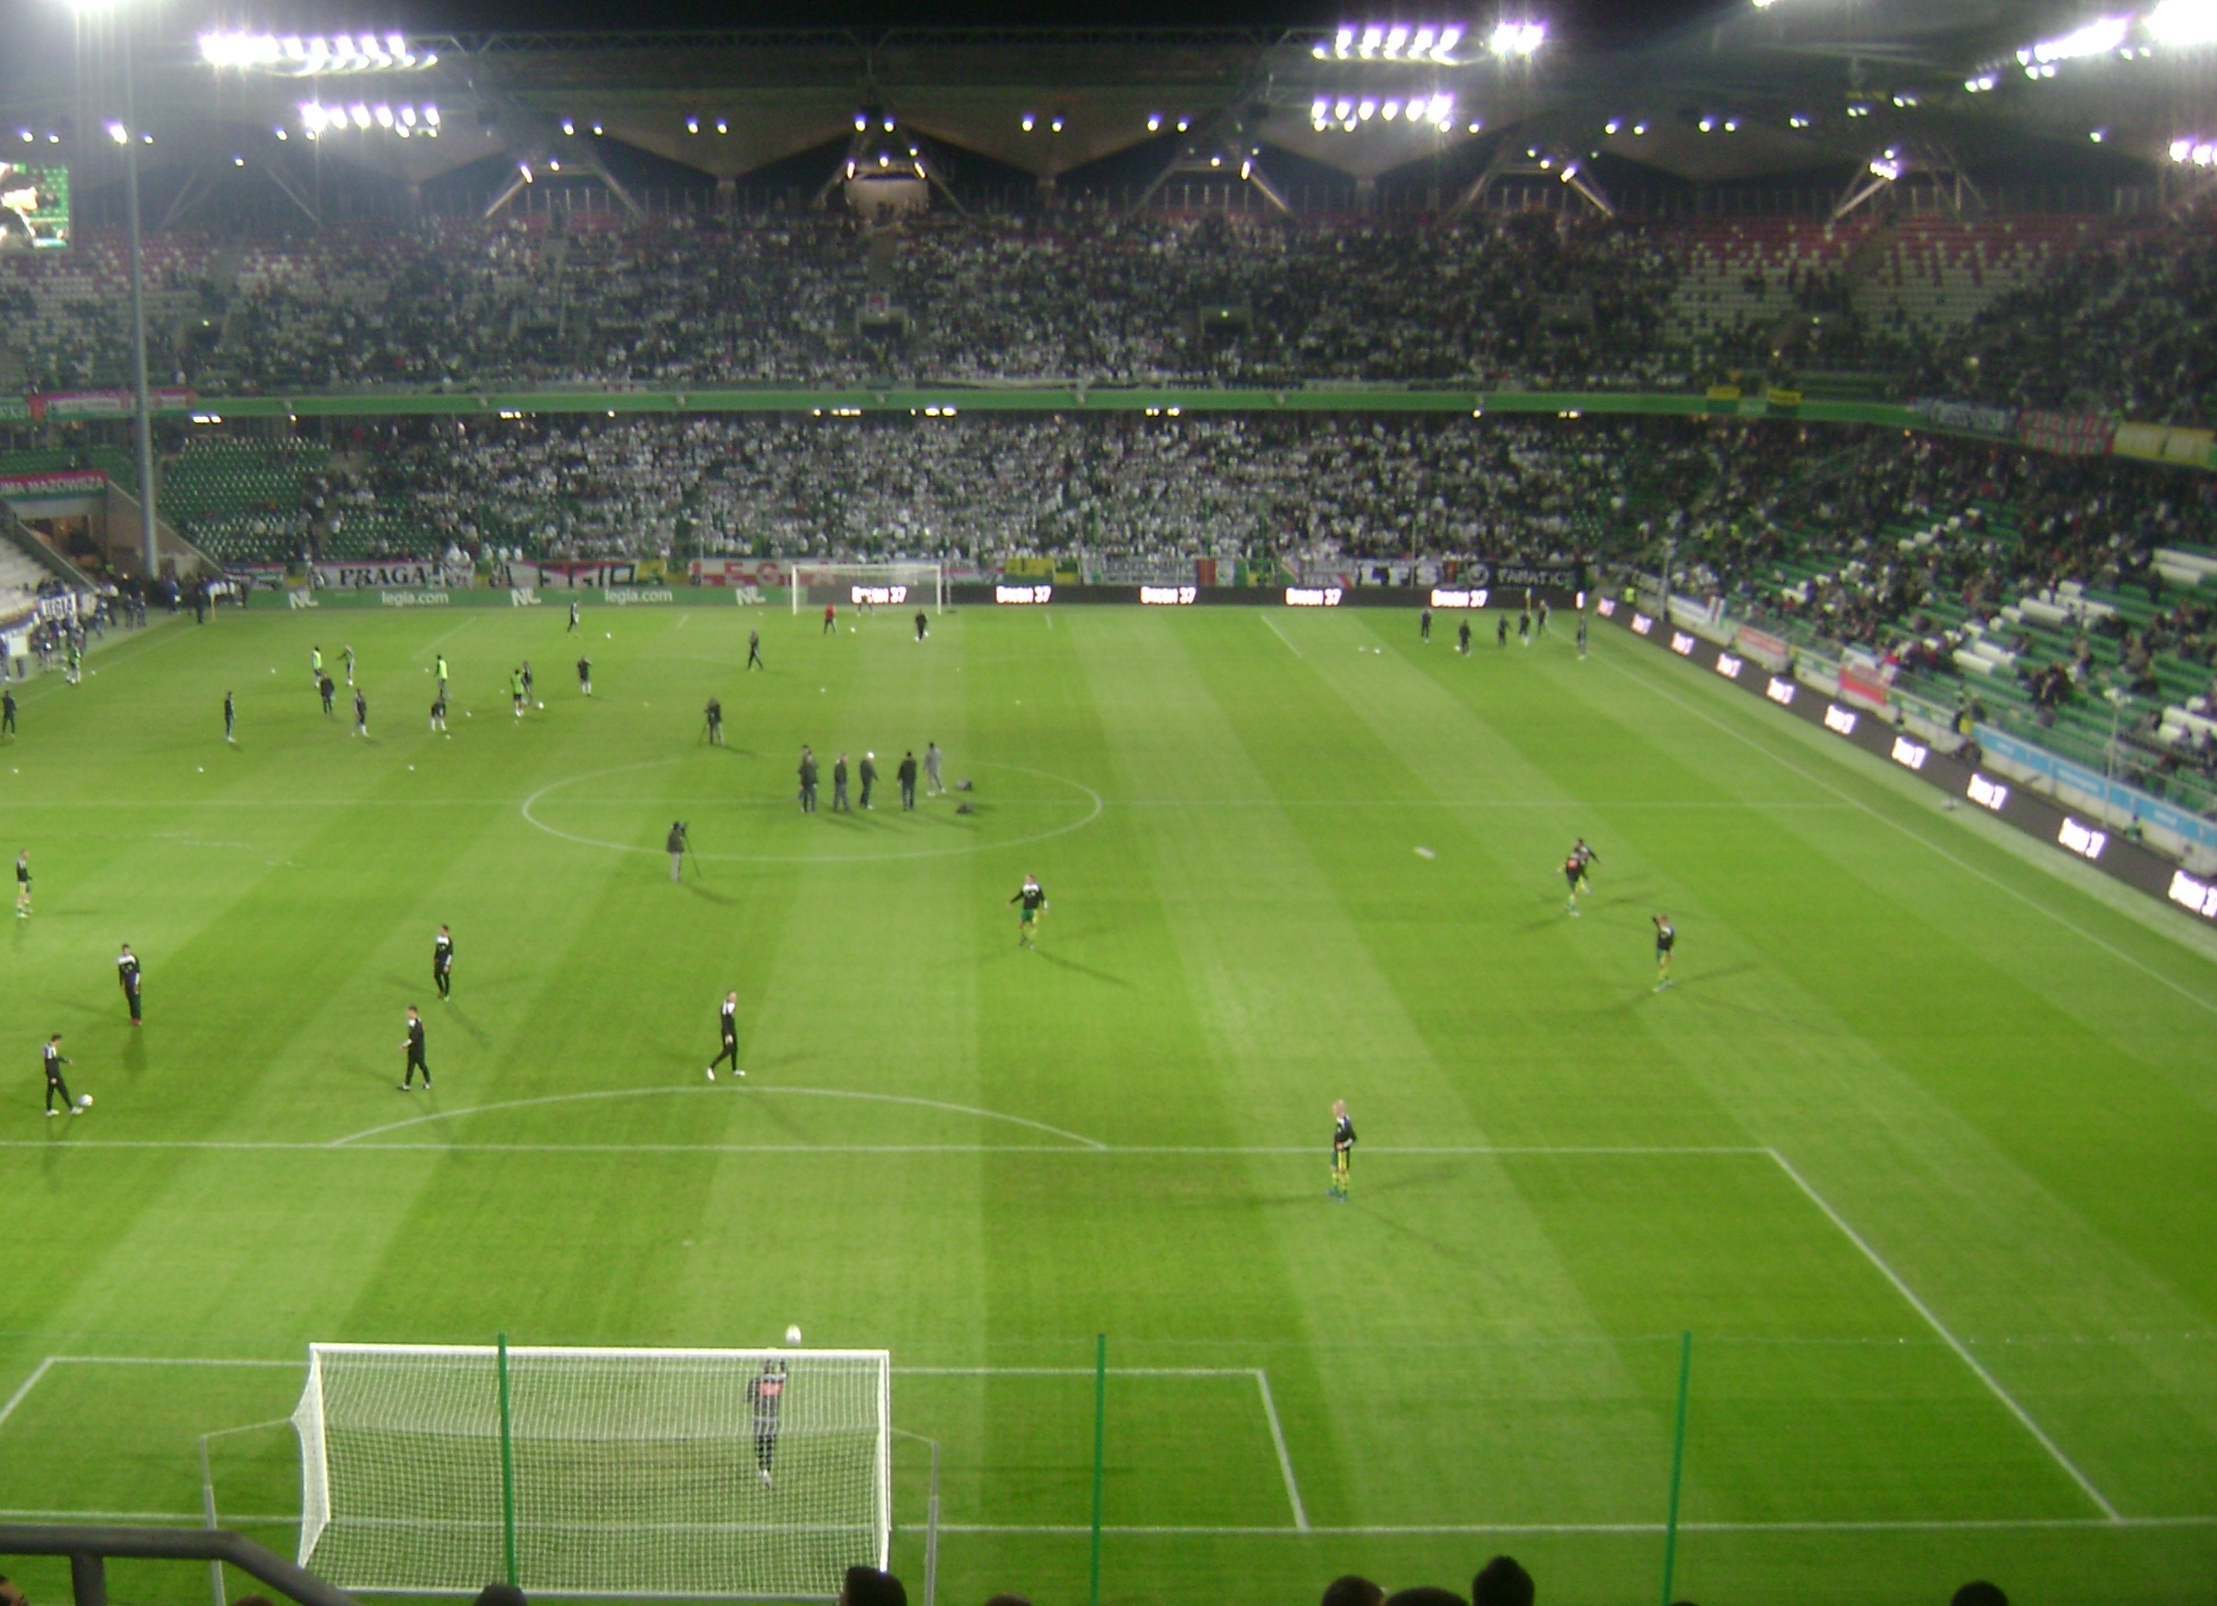 File:Charity football match Legia - Den Haag 3.JPG - Wikimedia Commons